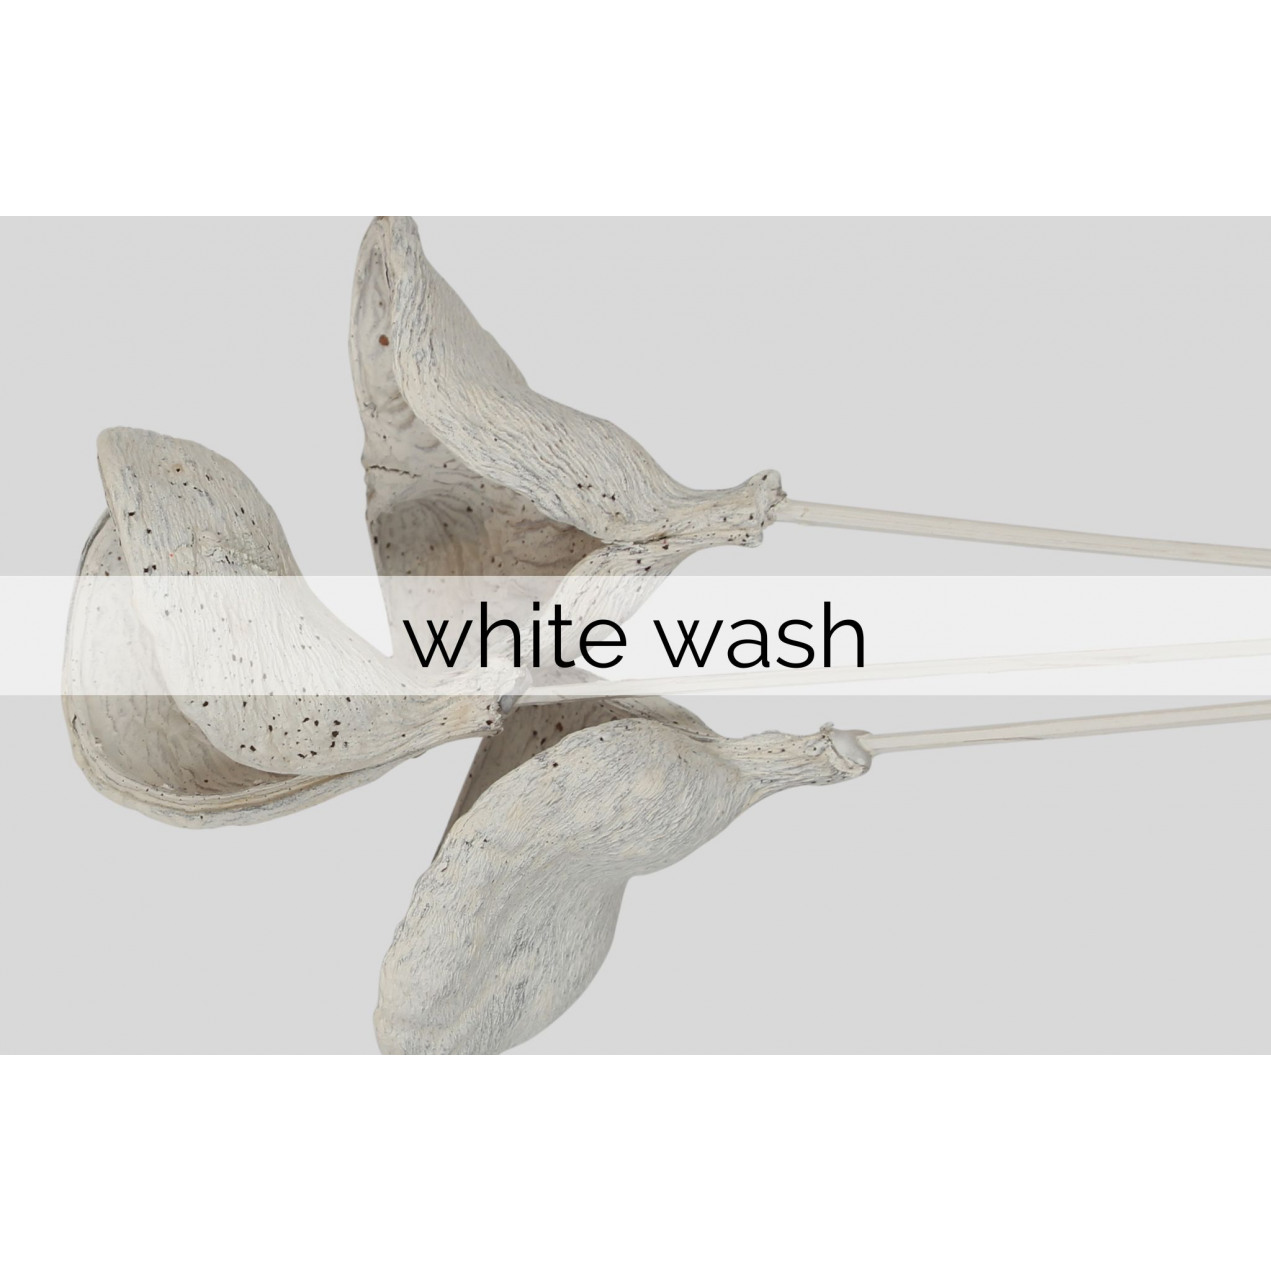 white wash